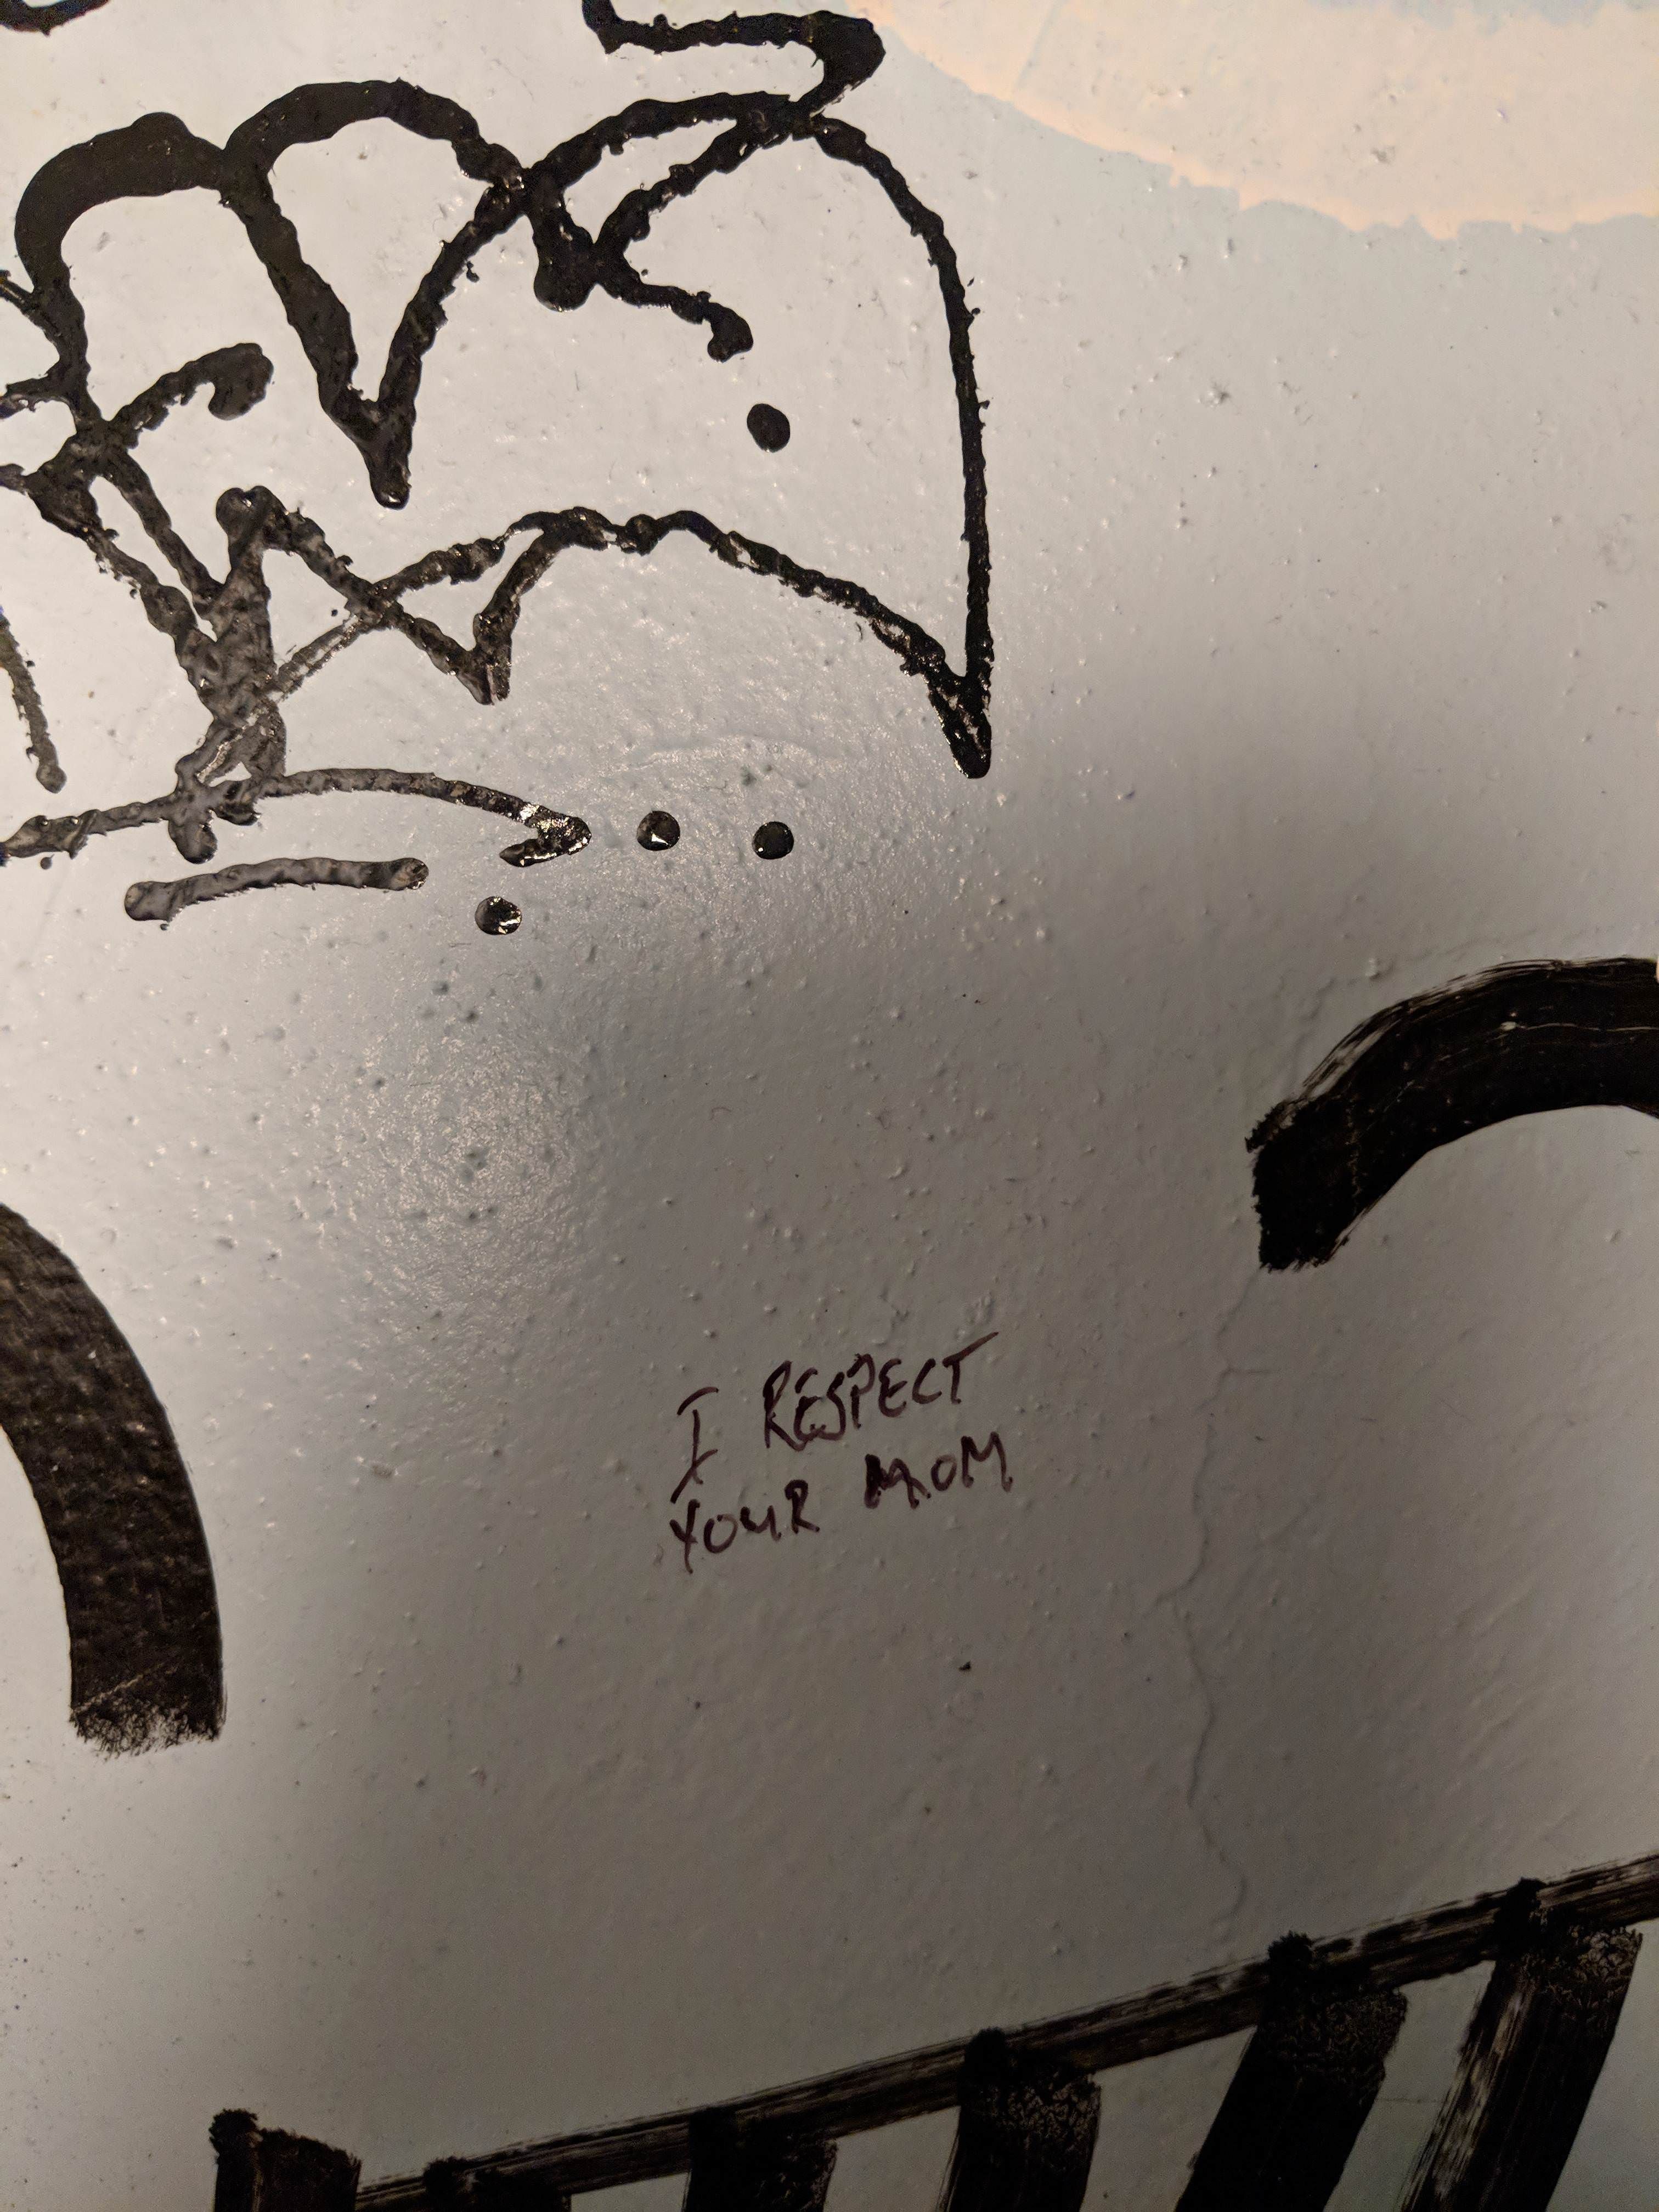 Canadian bathroom graffiti